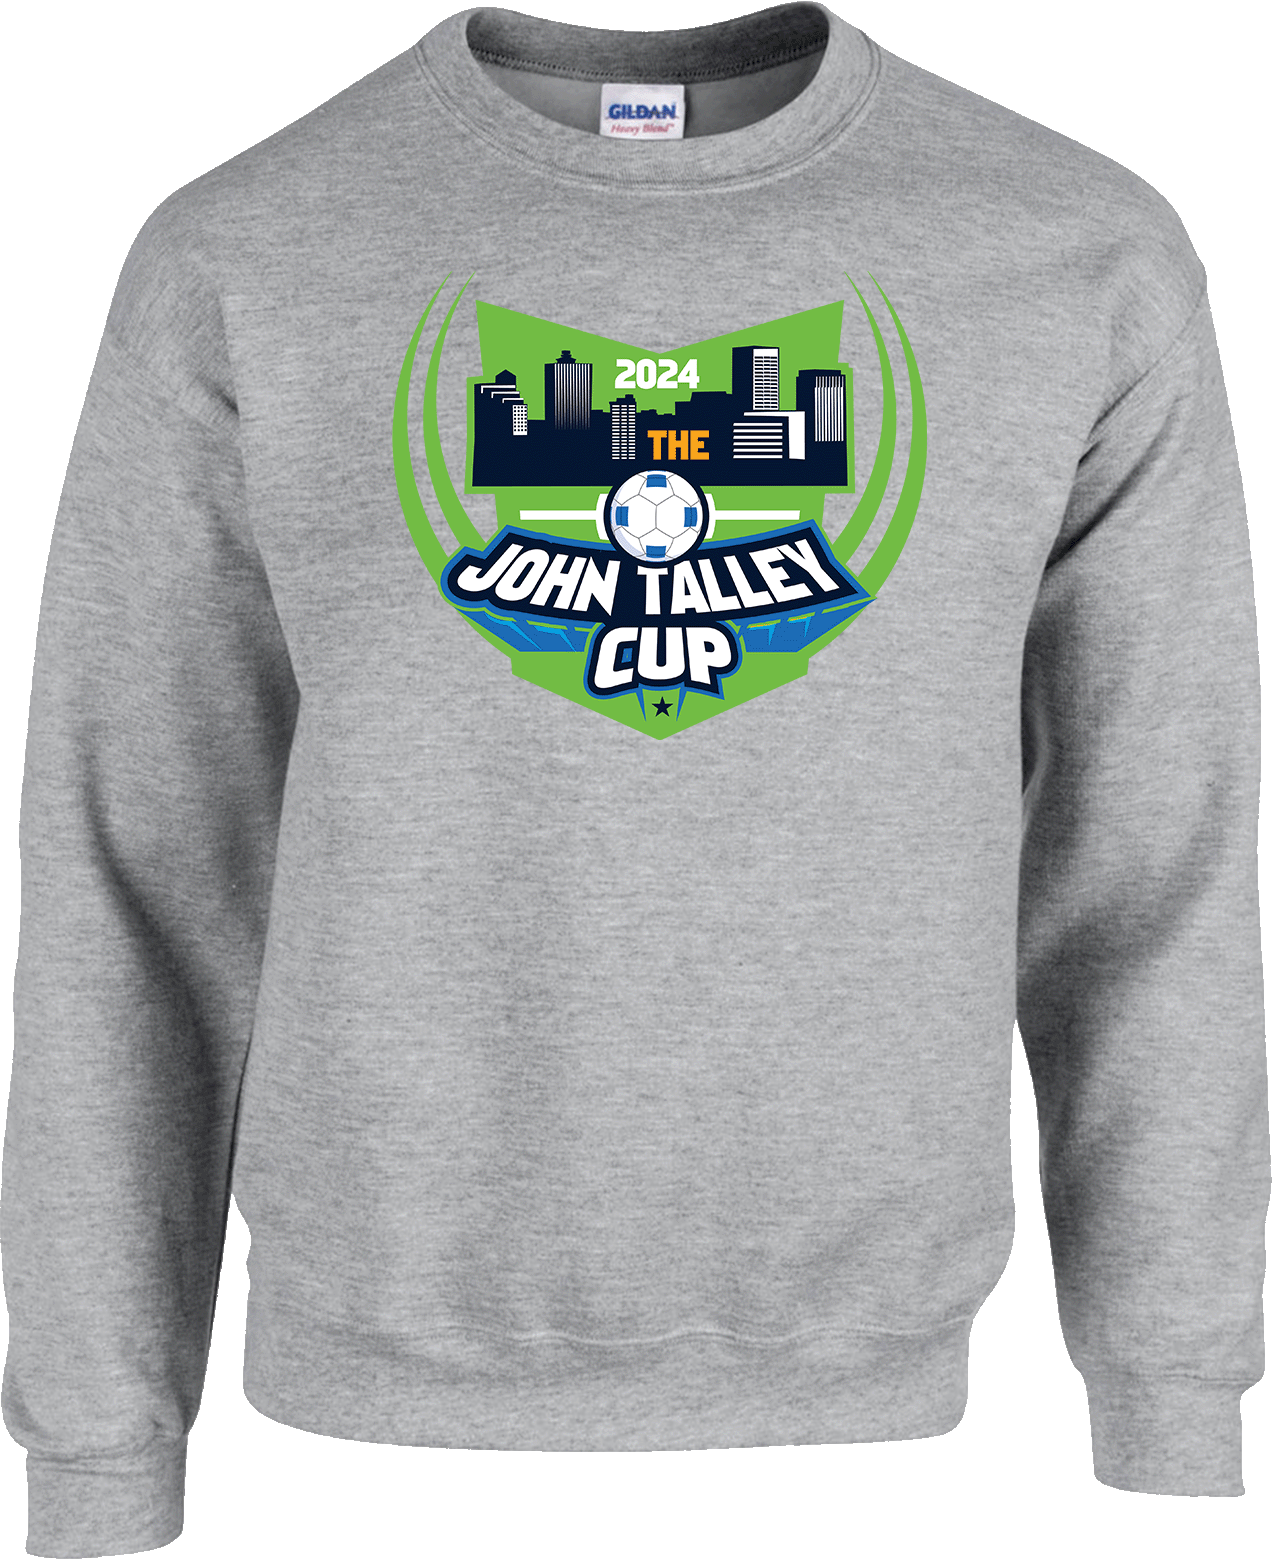 Crew Sweatershirt - 2024 The John Talley Cup